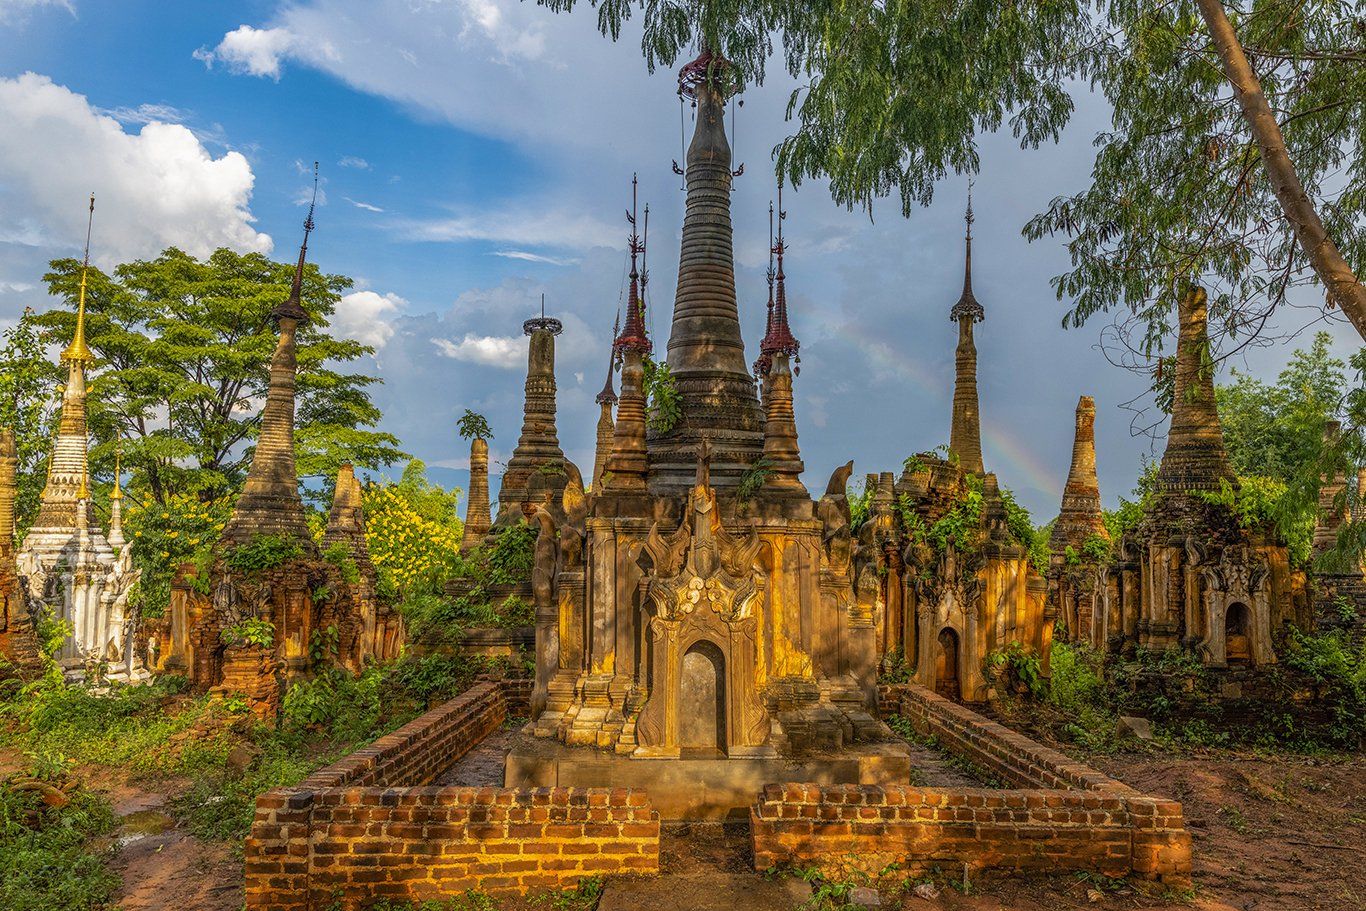 Myanmar Photo Gallery by David Ferguson